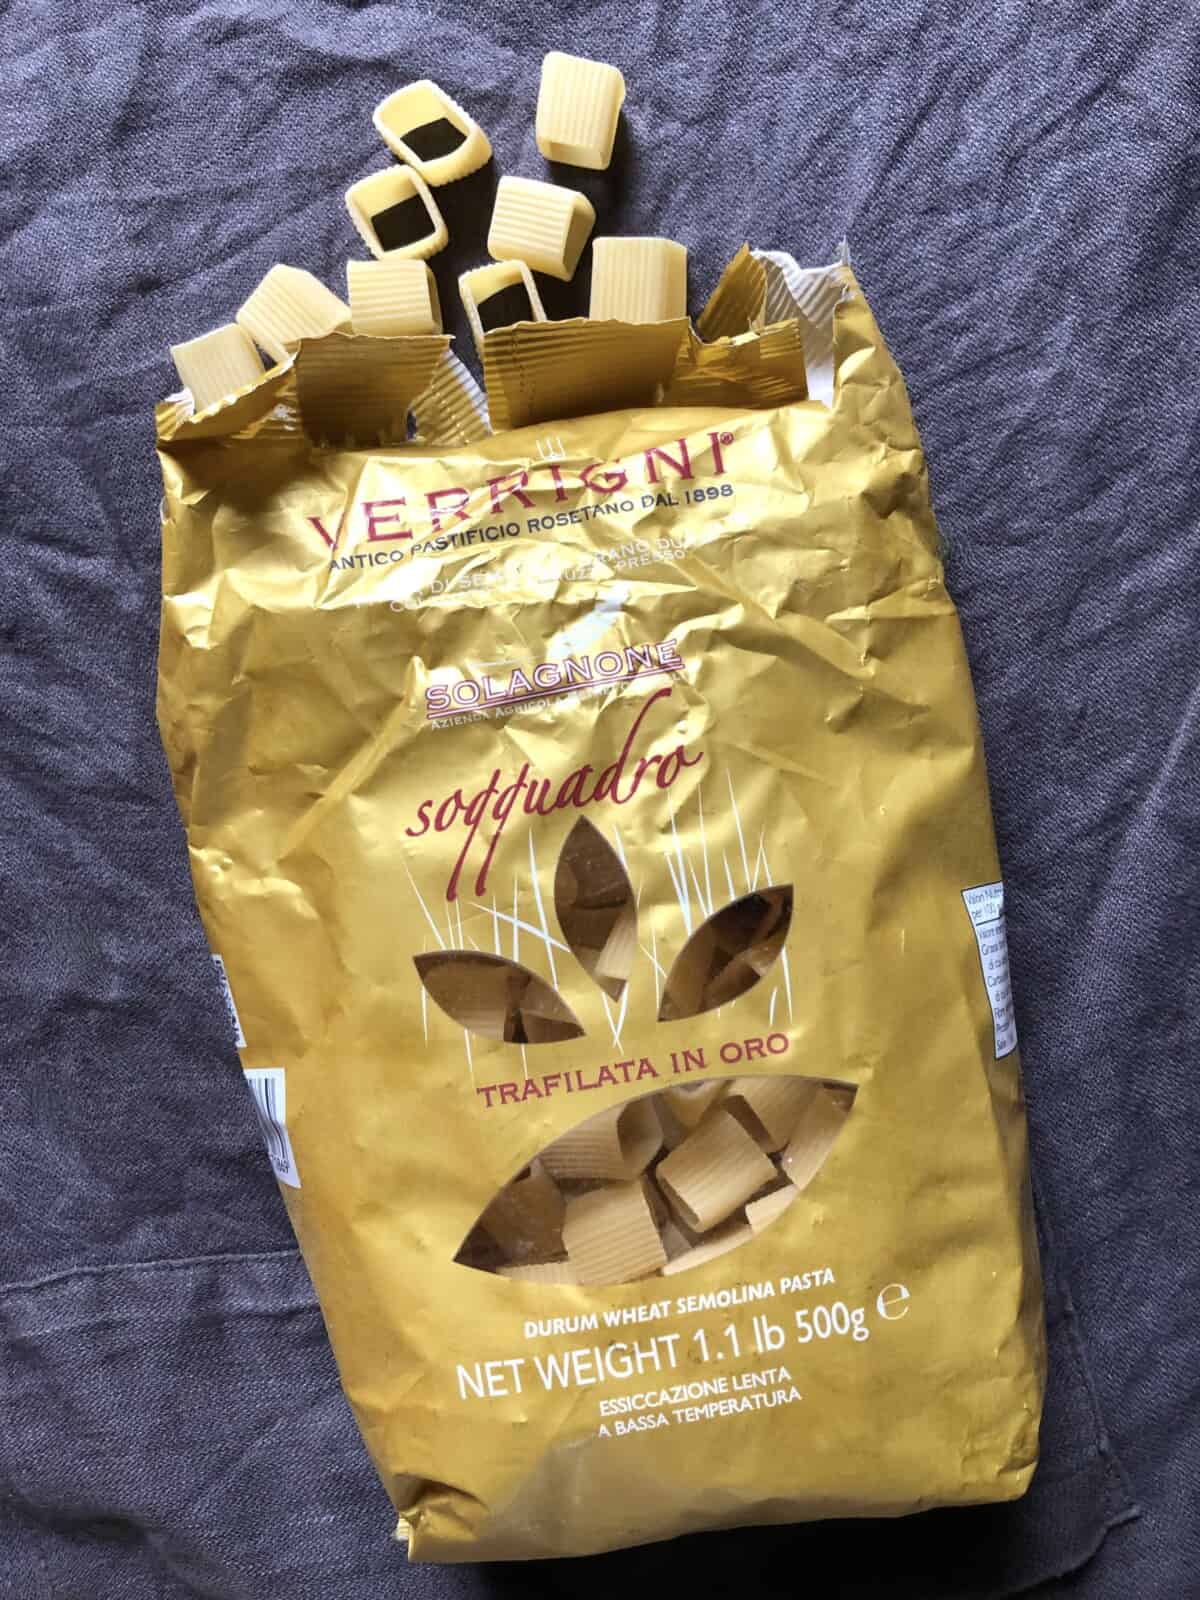 Verrigni gold-drawn pasta in the bag